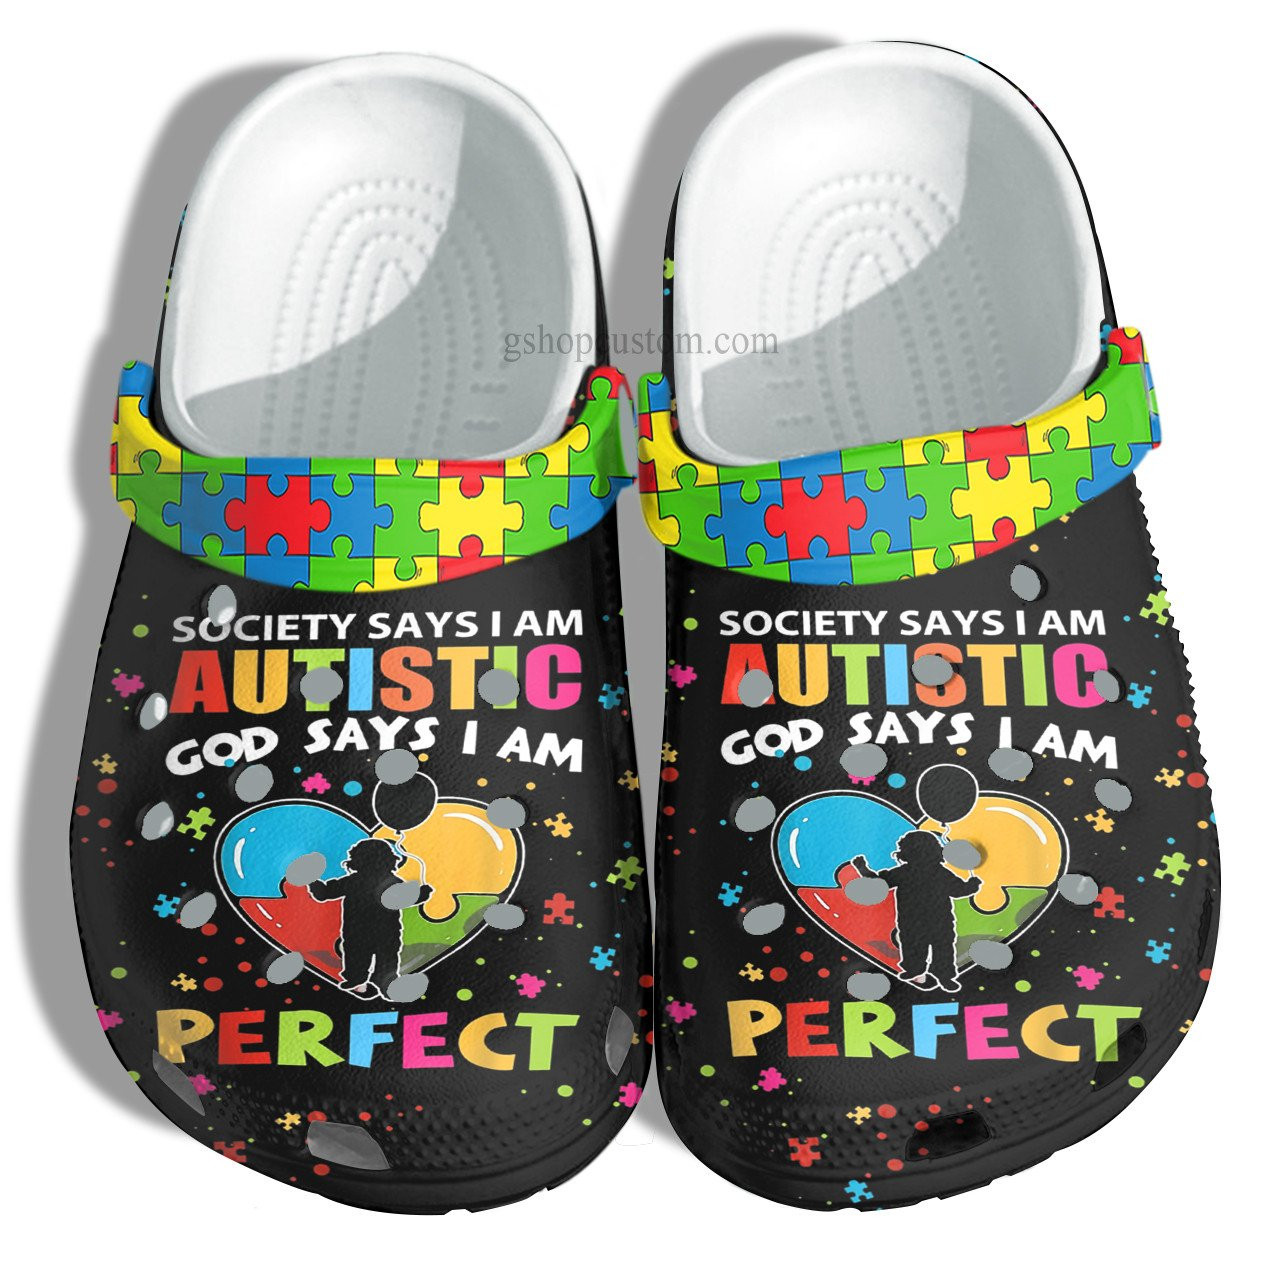 Autism God Say I Am Perfect Croc Shoes Gift - Society Autistic Puzzle Crocs Shoes Customize